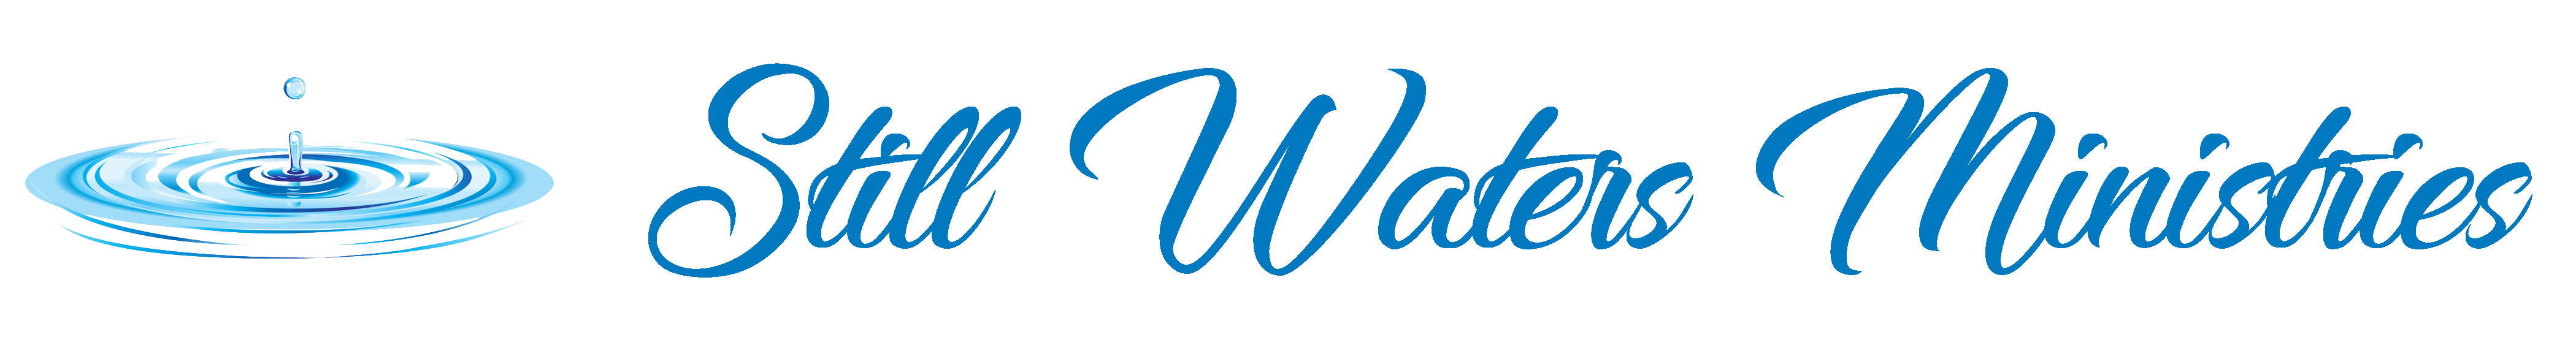 Still Waters logo 2